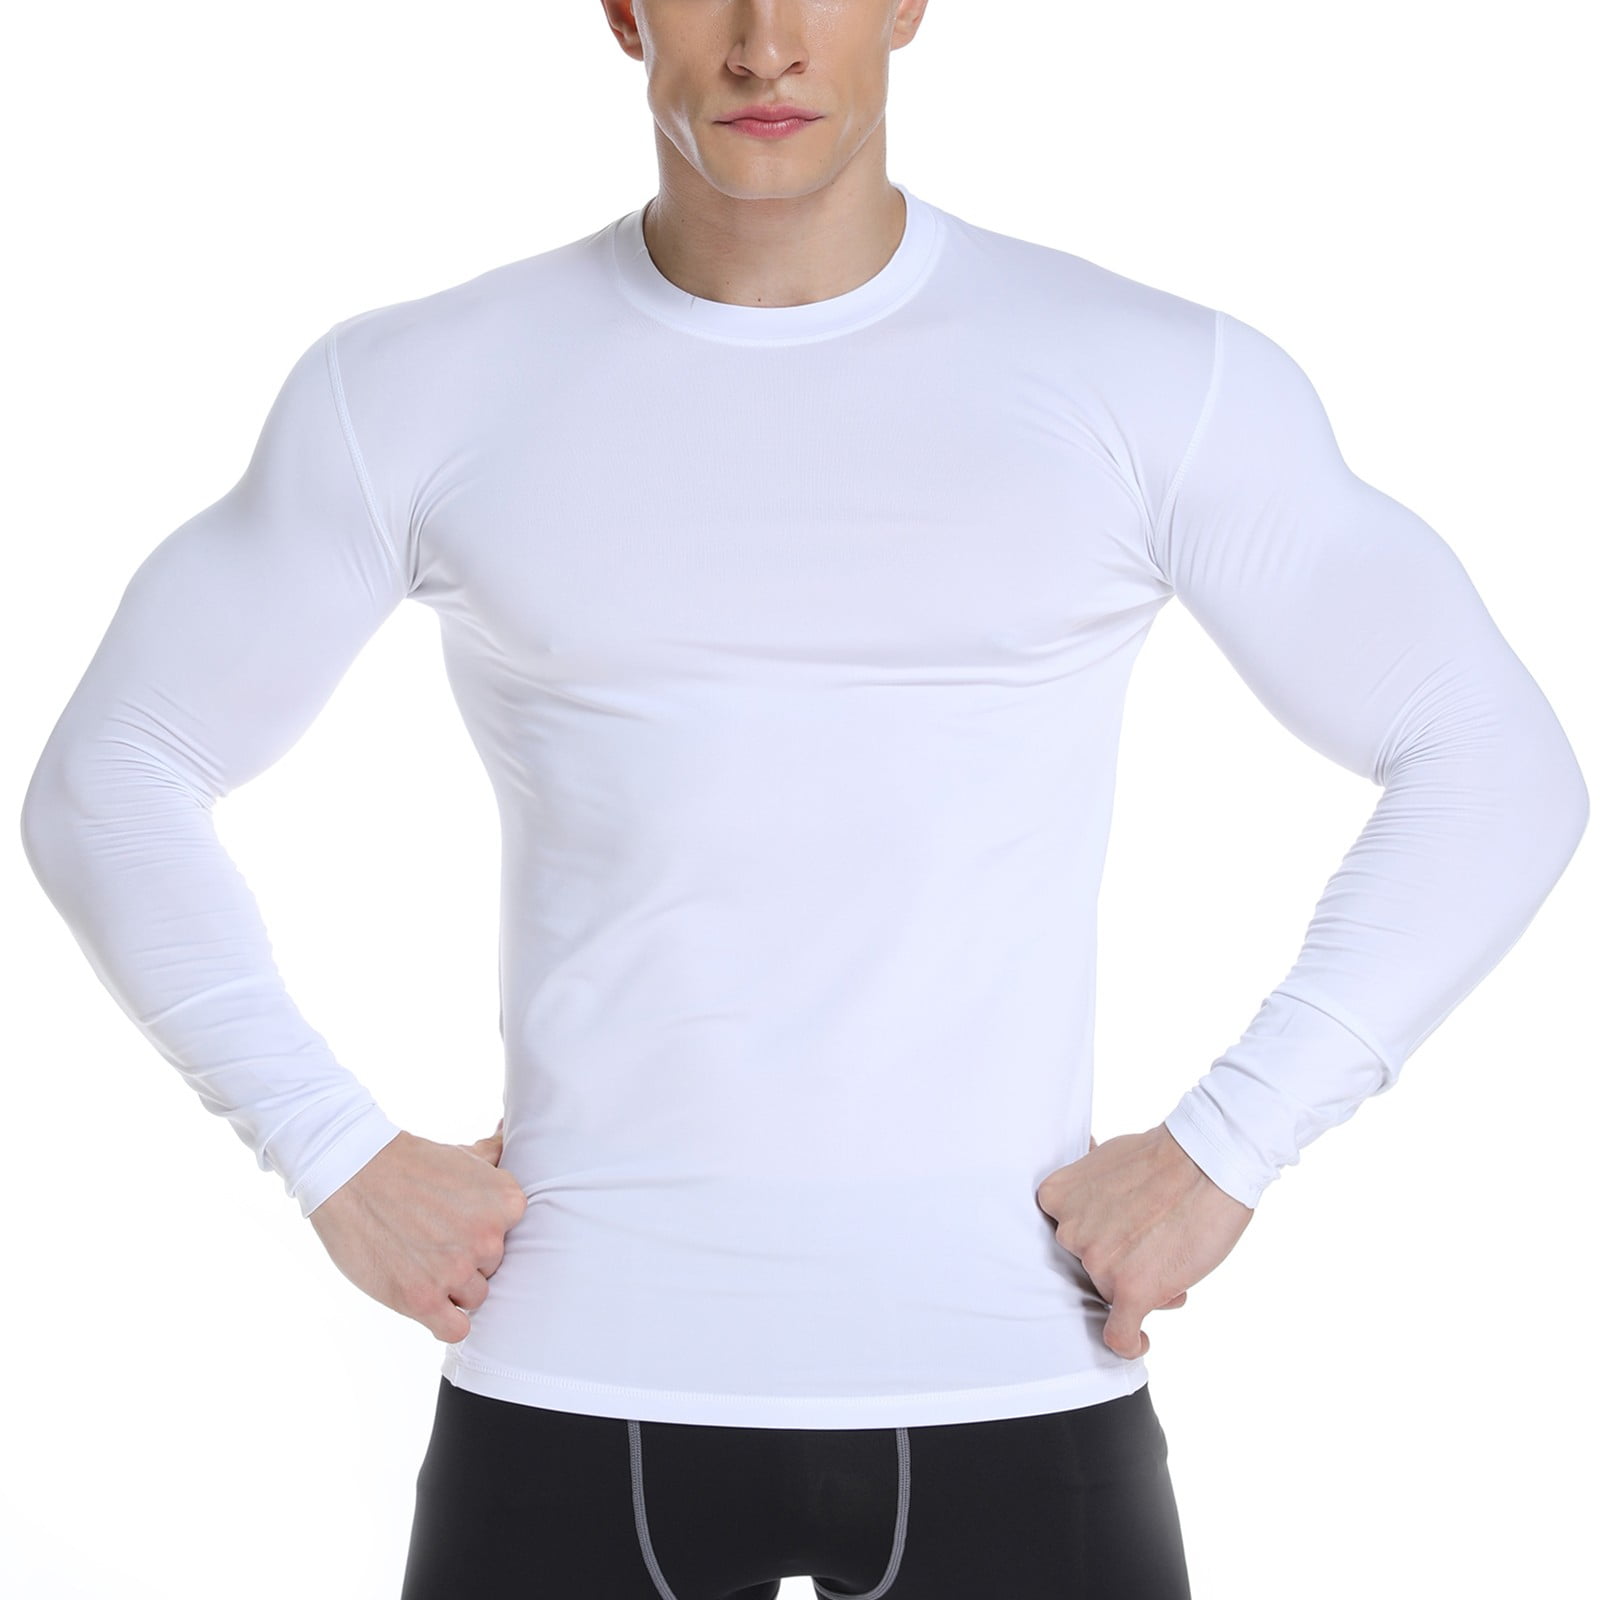 Men's Athletic Thermal Shirt Mock Neck 1/4 Zip Under Base Layer Running Gym Top 